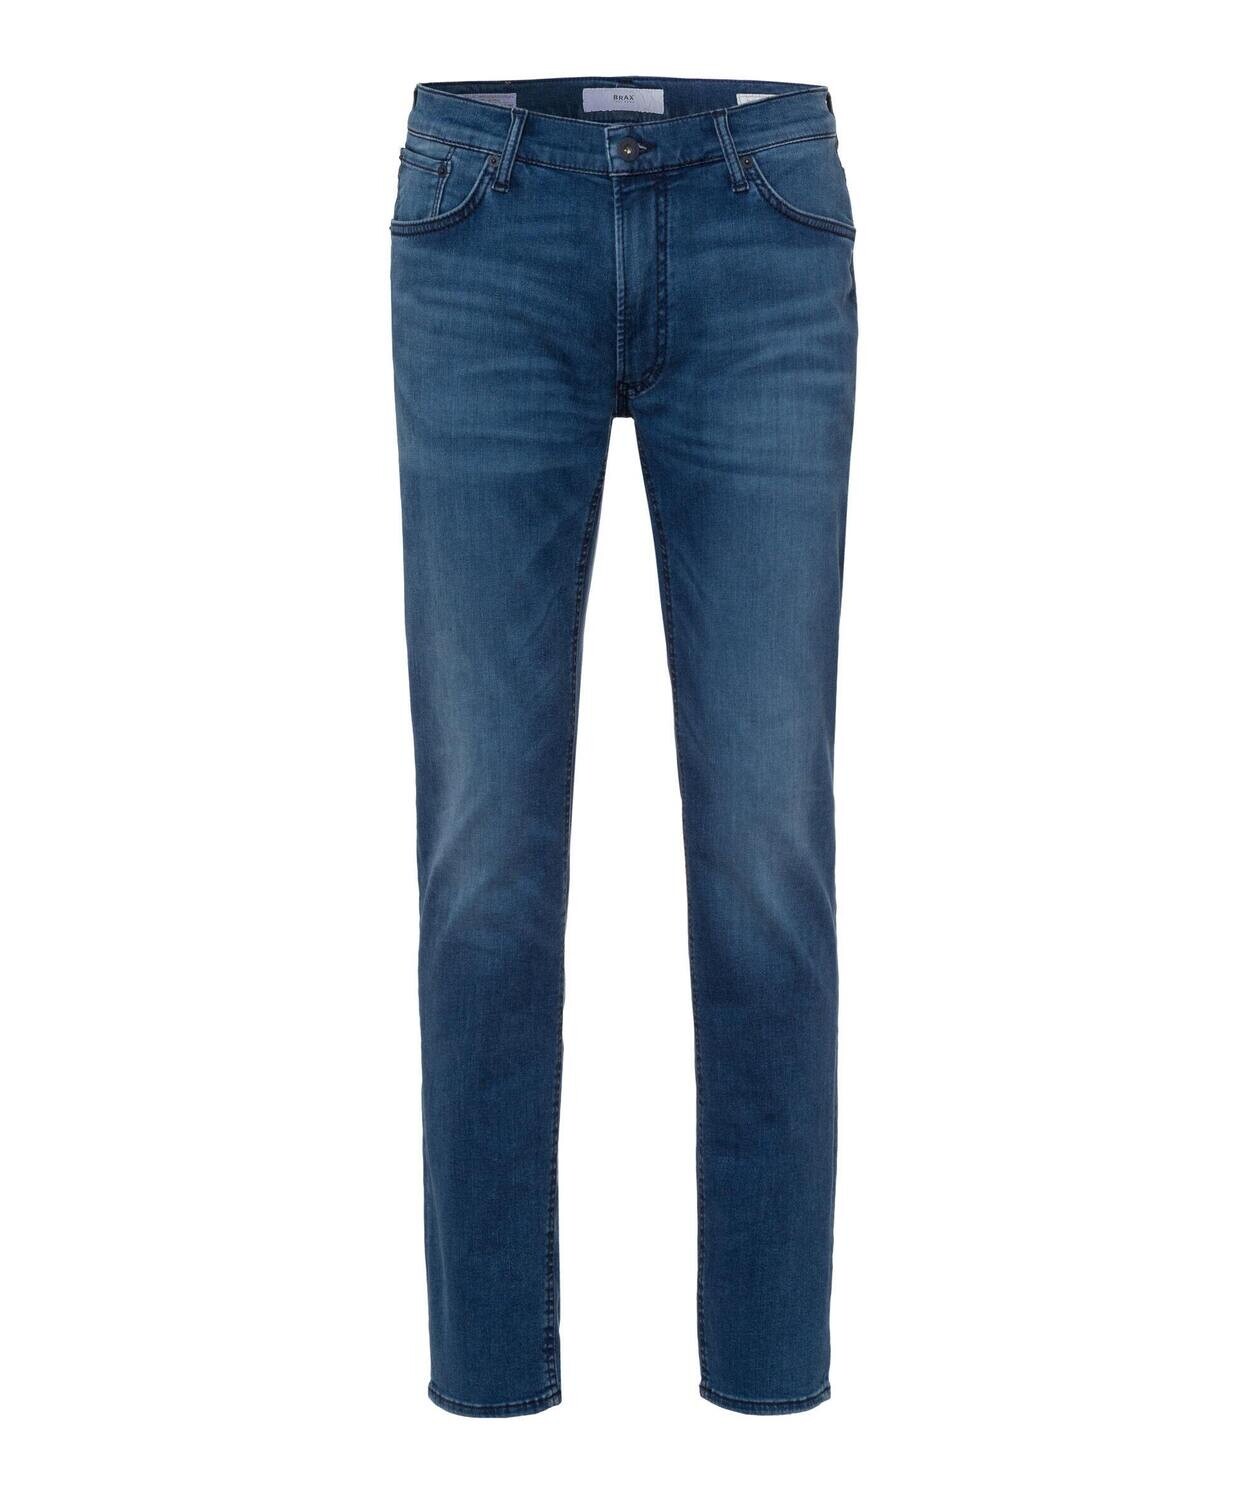 Brax Men chuck jeans, Size: 33L 32